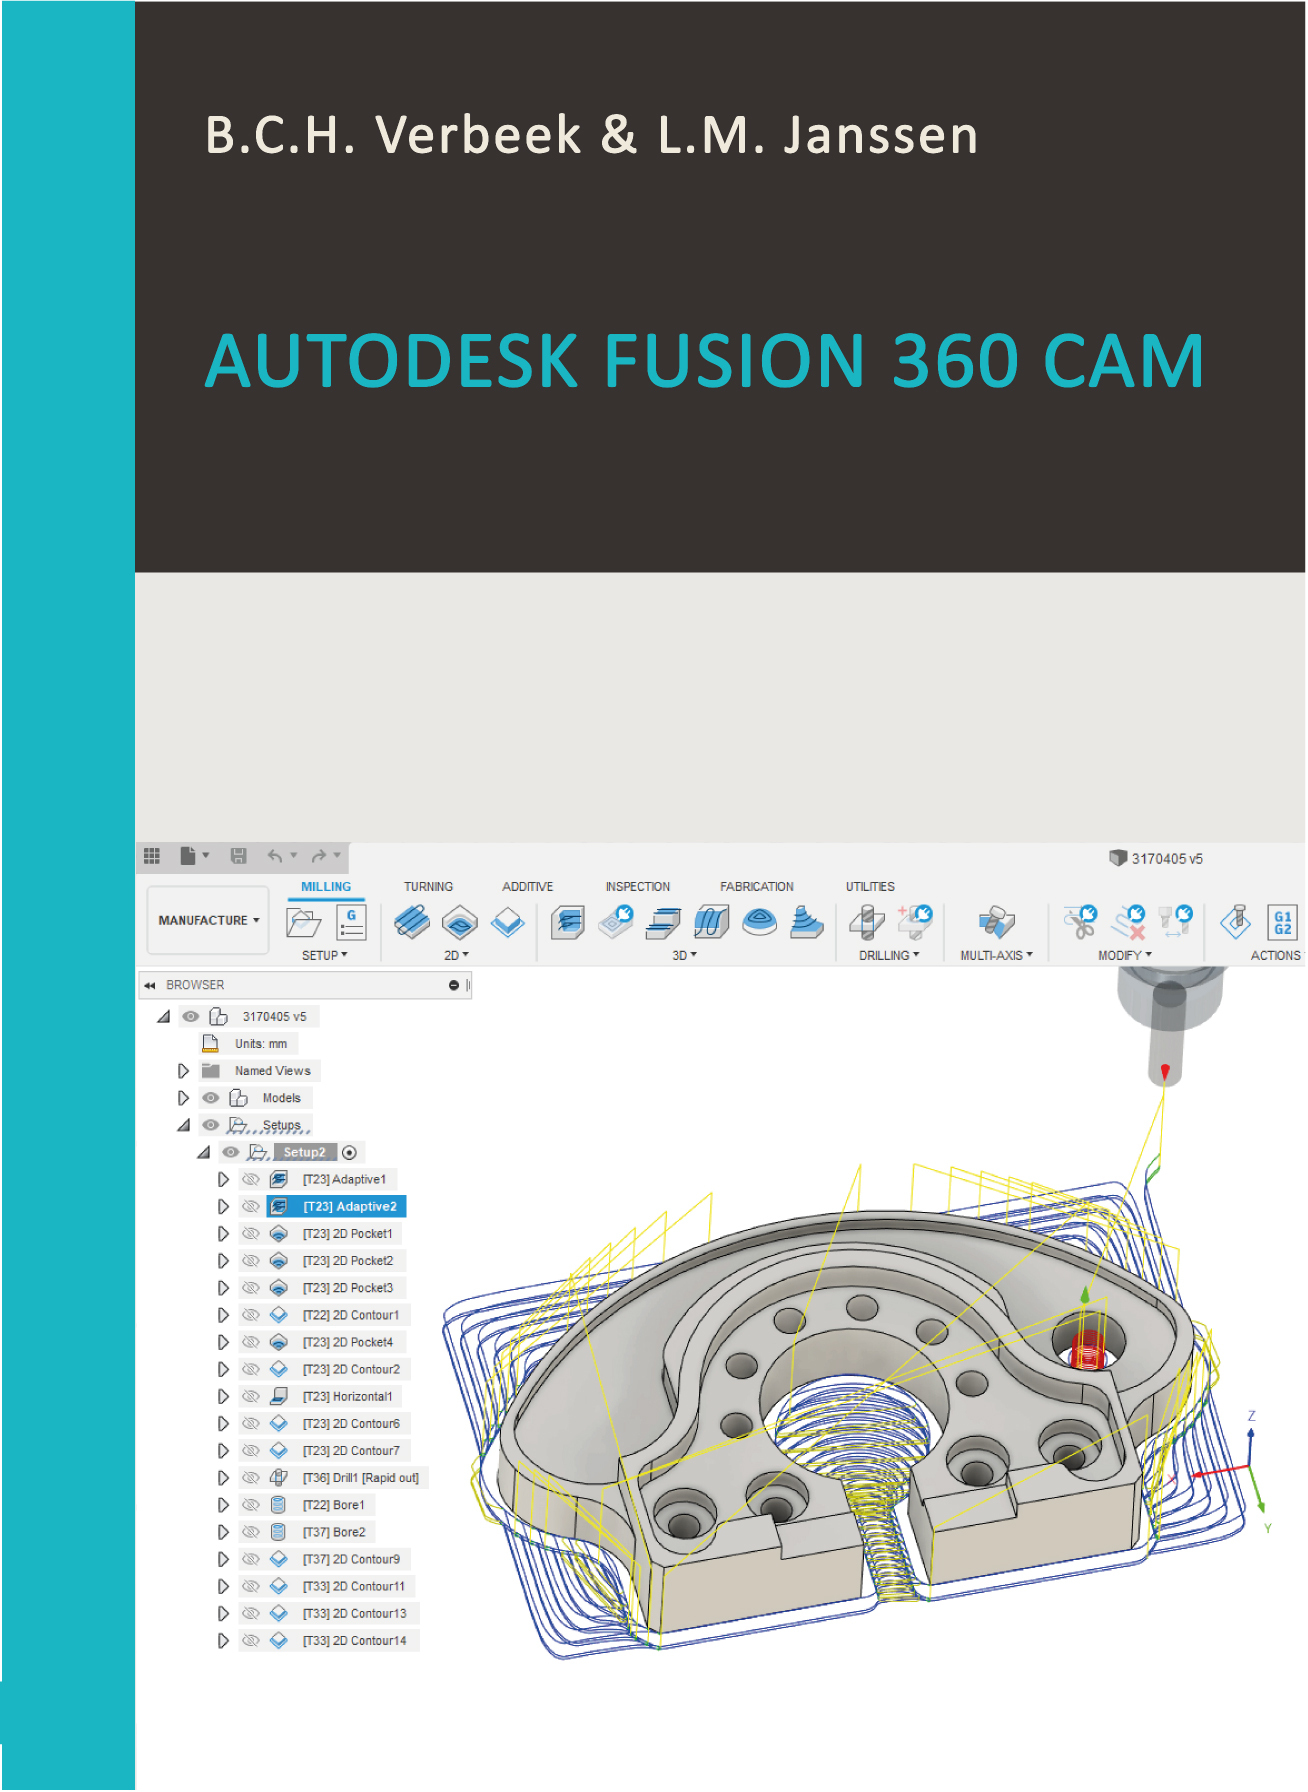 Fusion360 CAM's thumbnail image